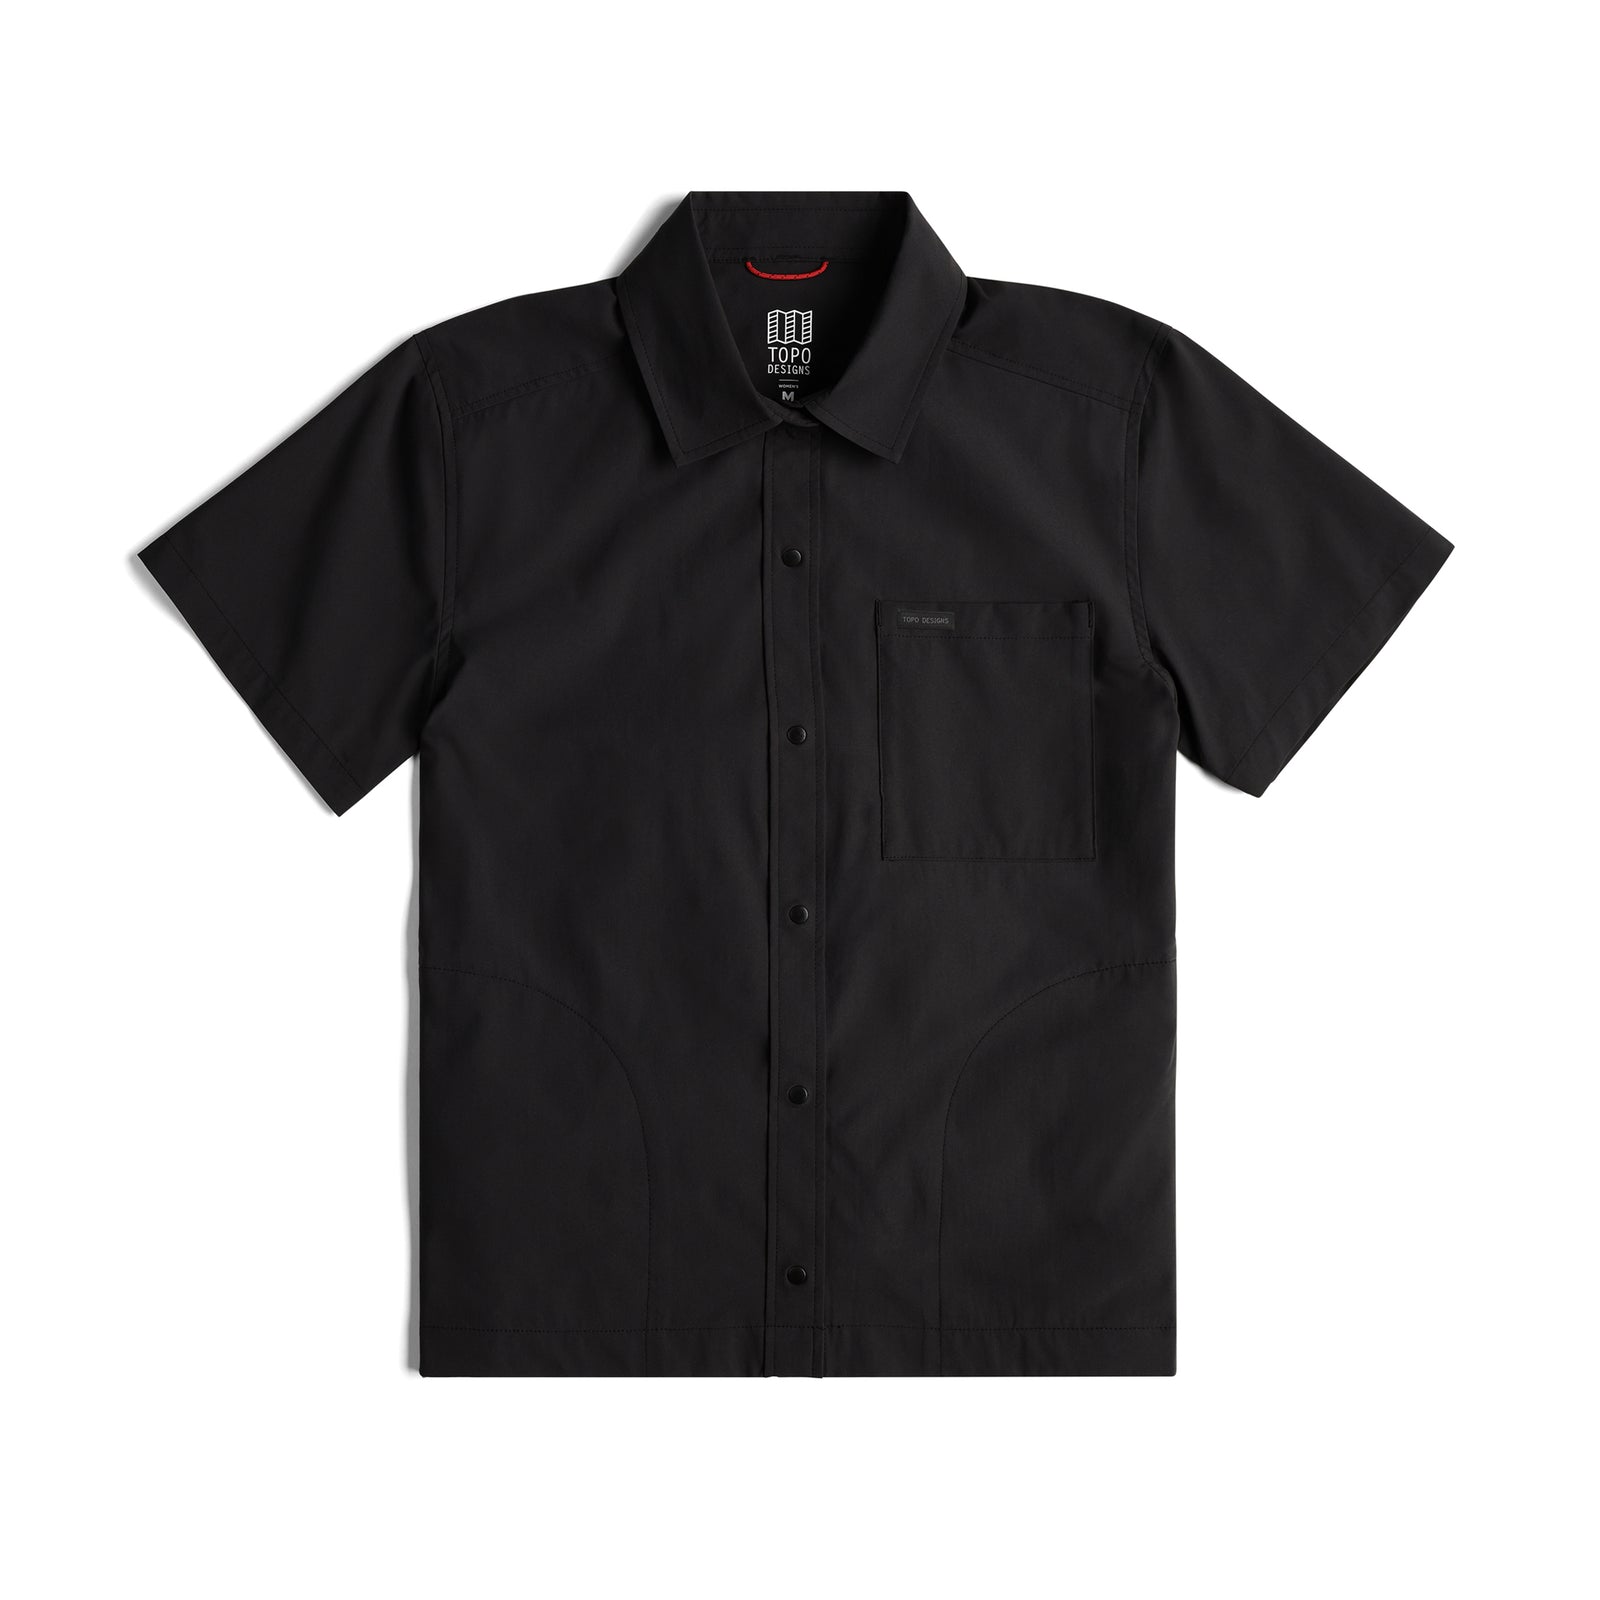 Topo Designs Women's Global Shirt Short Sleeve 30+ UPF rated travel shirt in "Black".